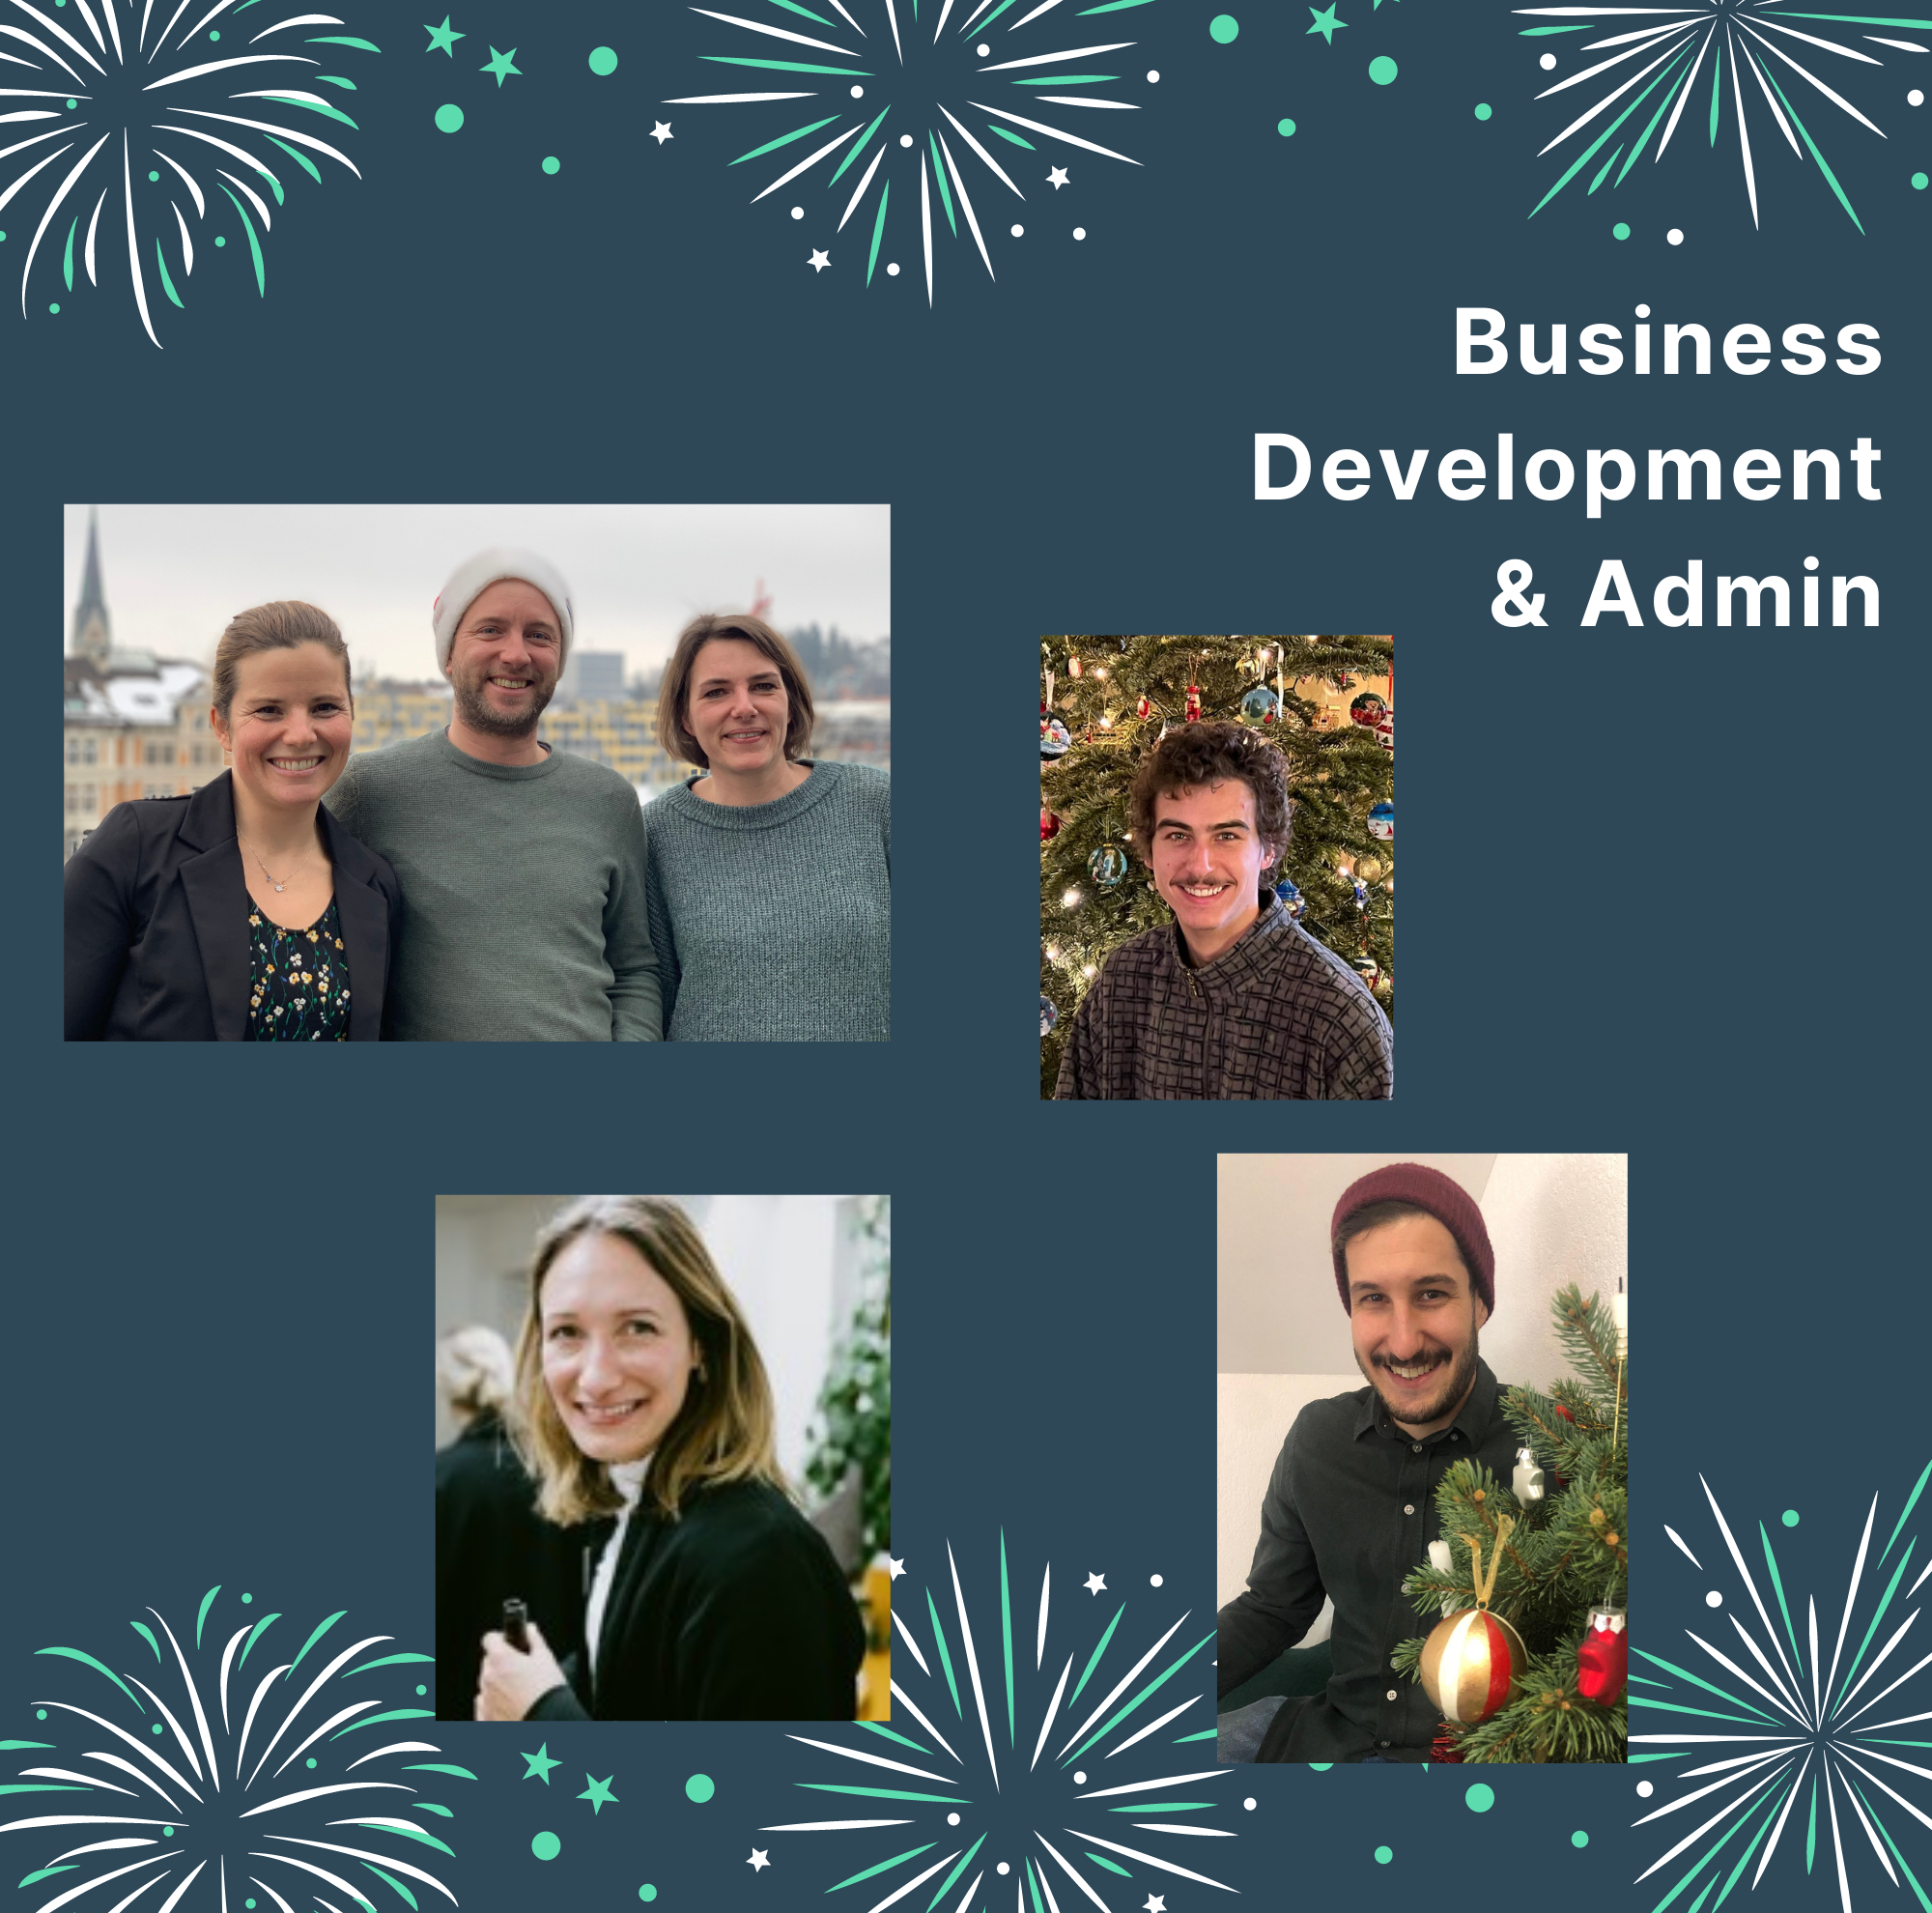 Business Development & Admin Team: Julia Baur, Daniel Baur, Regula Kürsteiner, Daniel Schulz, Sara Funcke, Robin Wagner